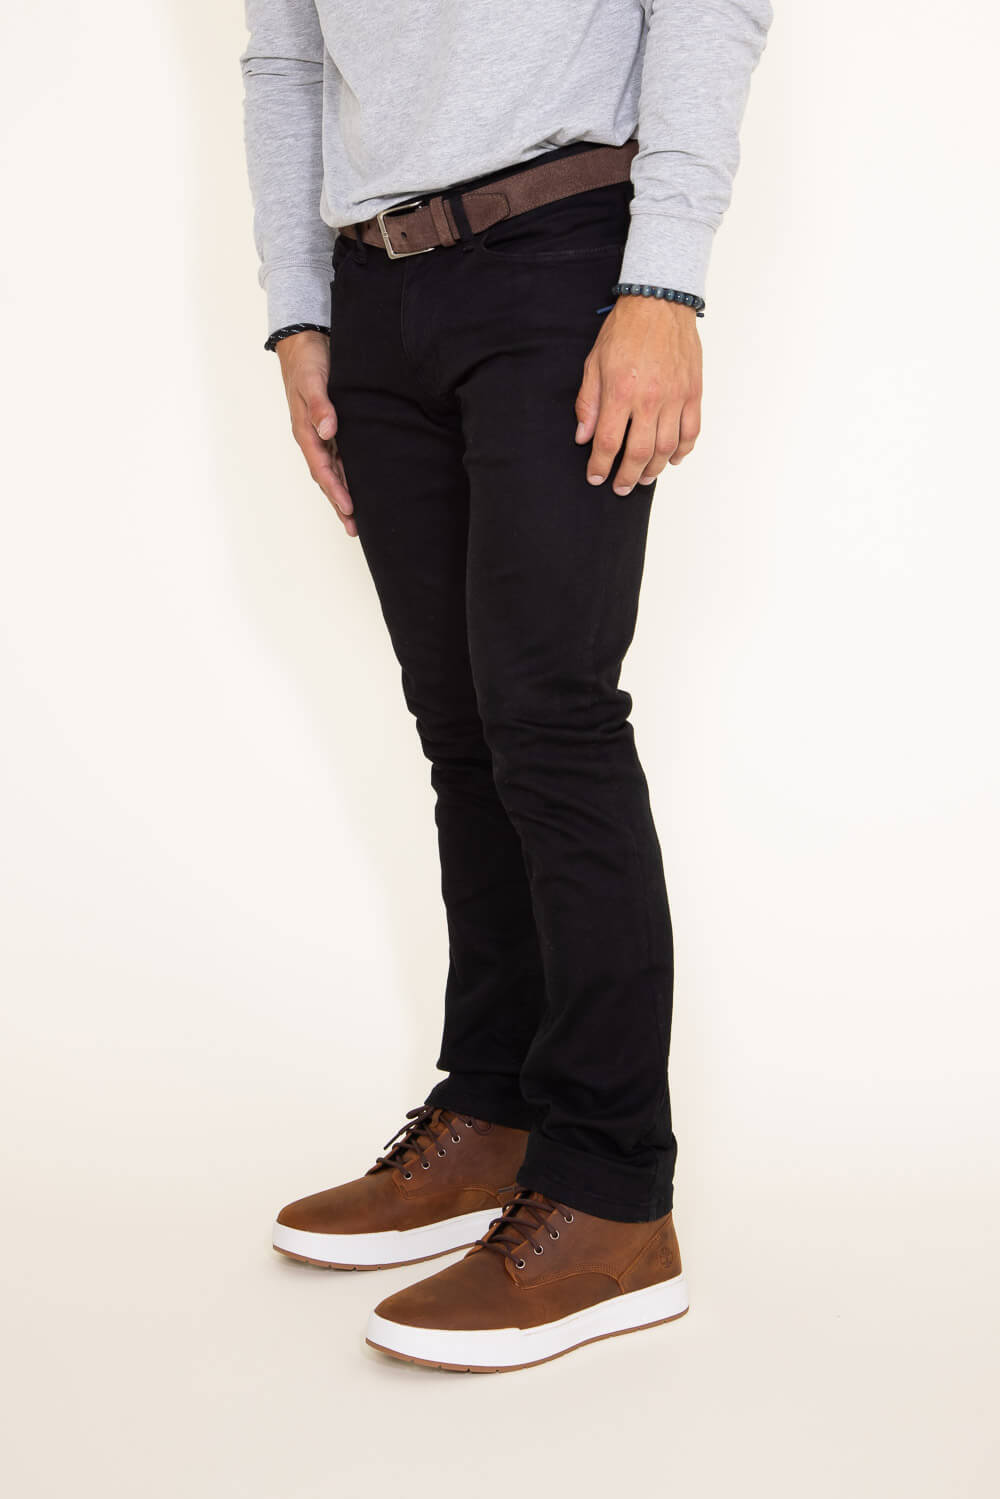 Buy Jet Black Jeans for Men by MUFTI Online | Ajio.com